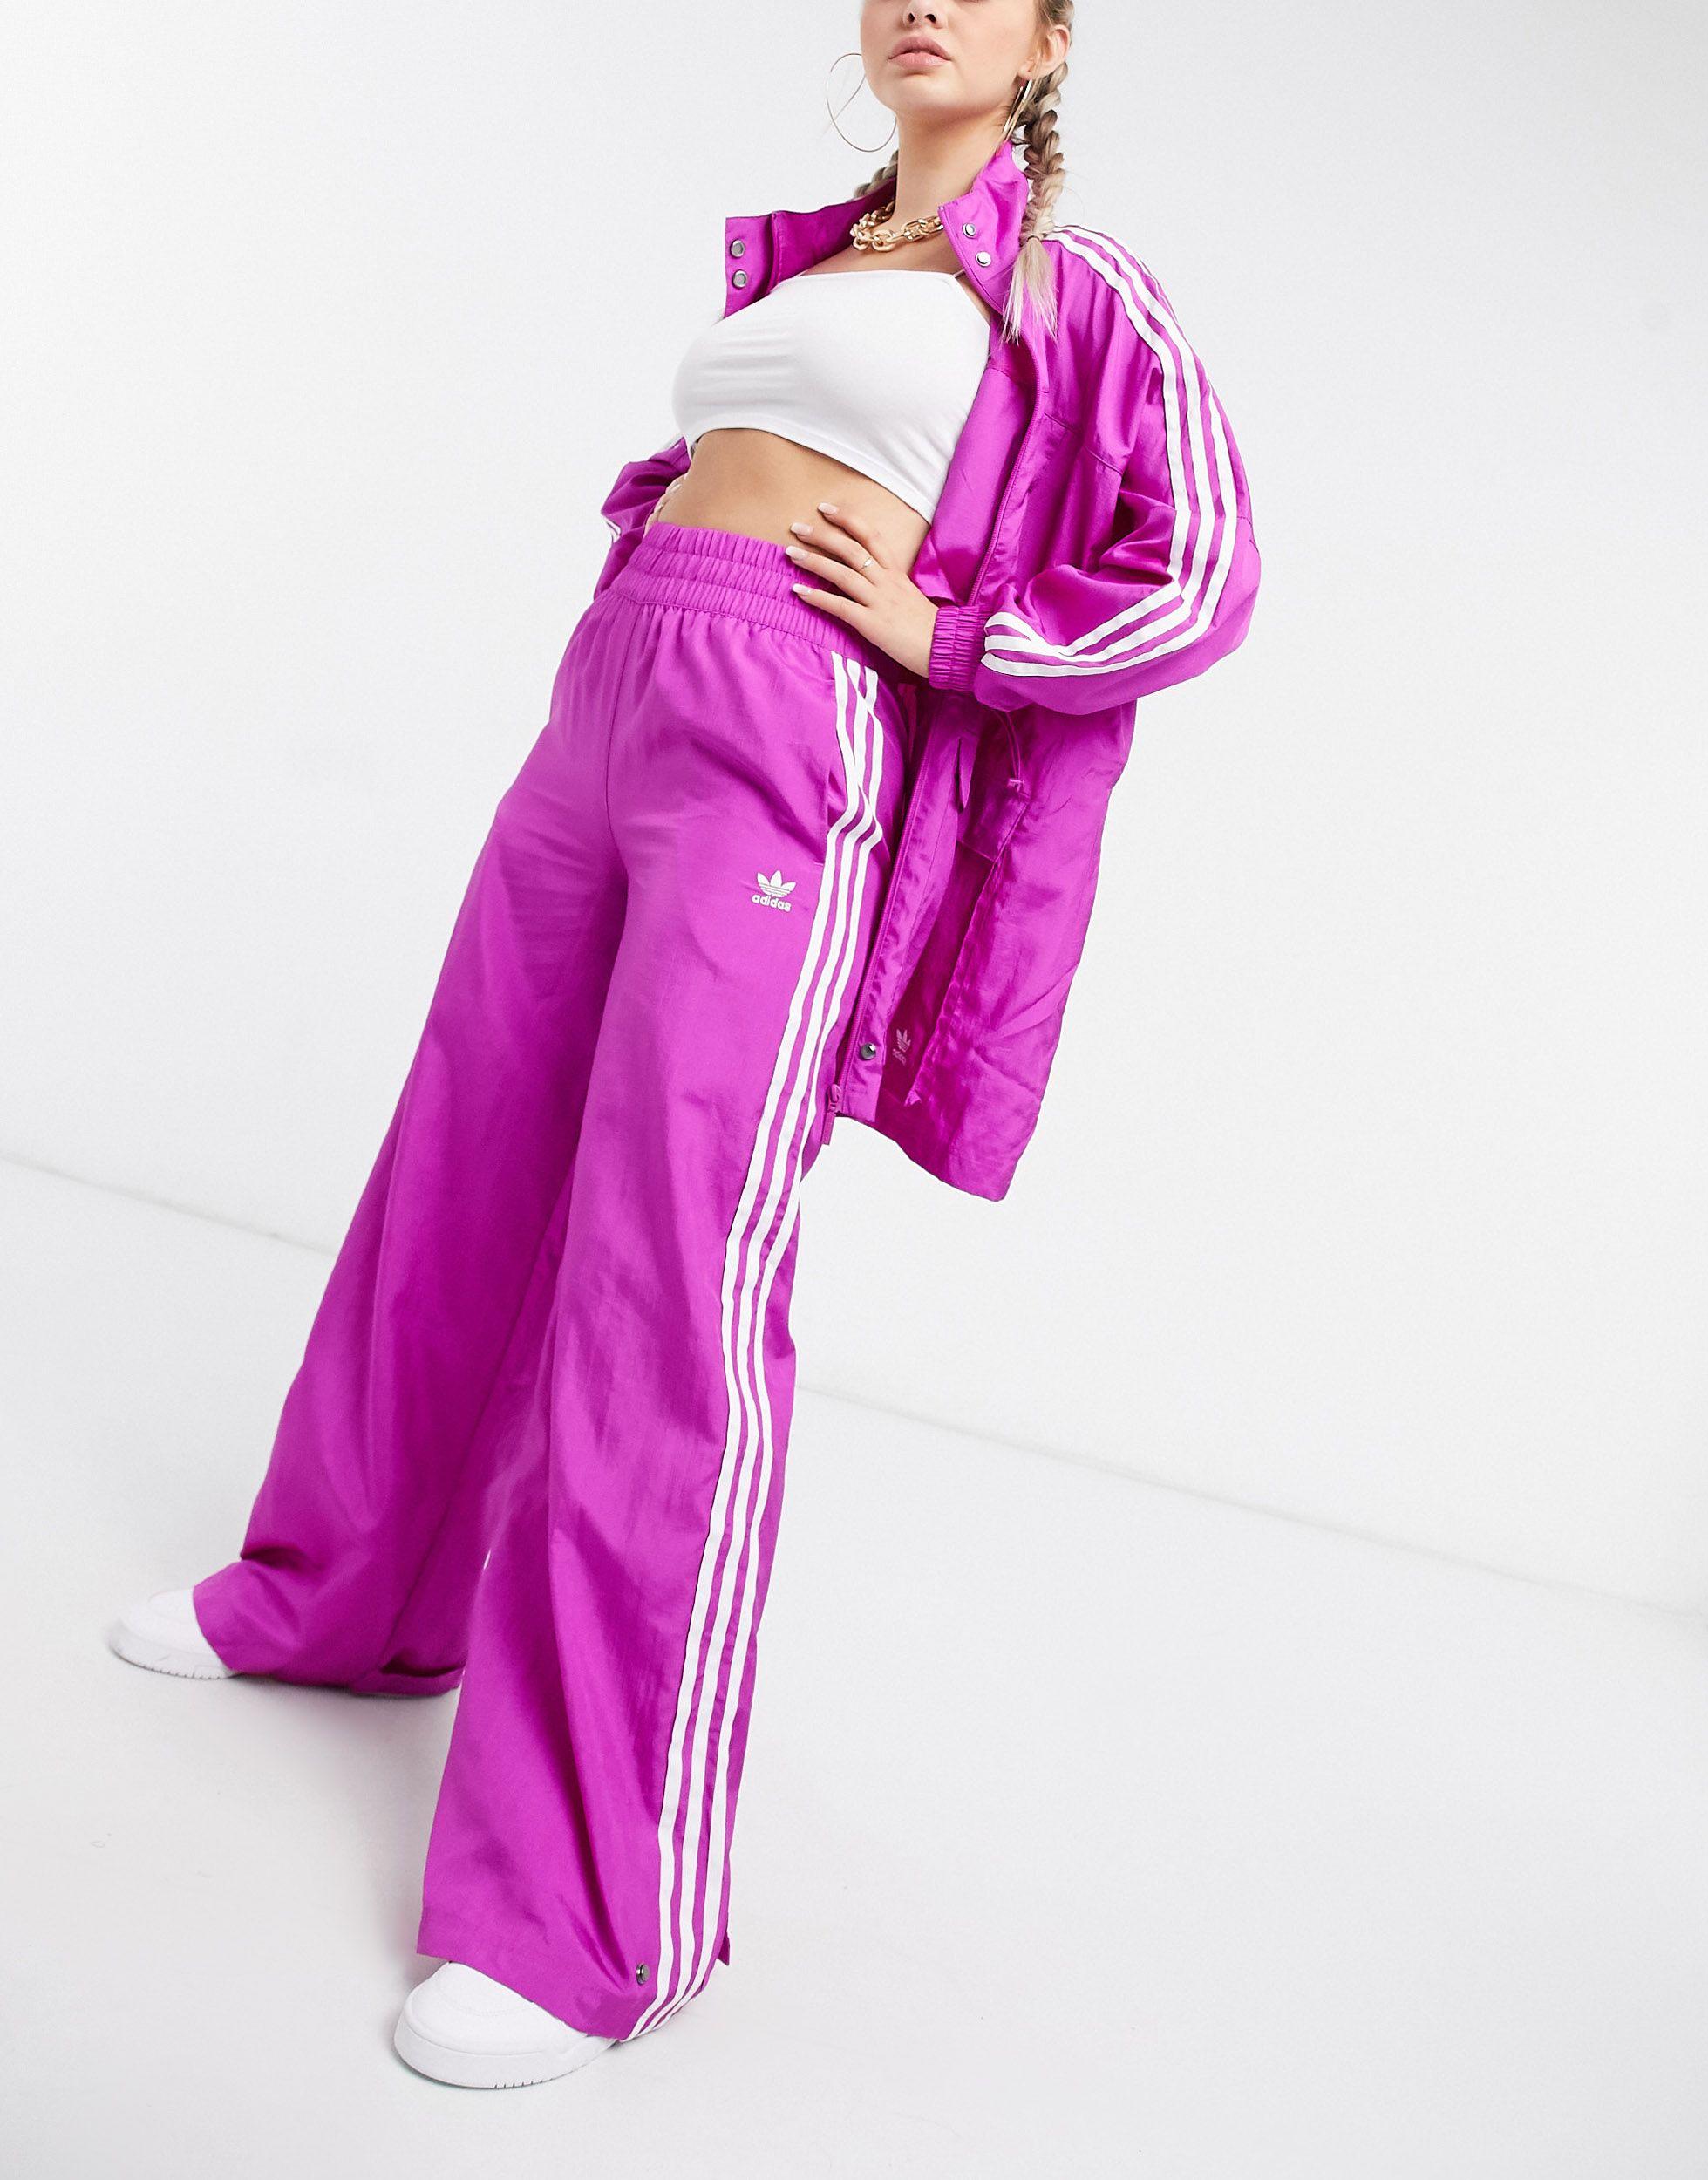 adidas Originals Bellista Three Stripe wide-legged Pants in Vivid Pink (Pink)  | Lyst Australia